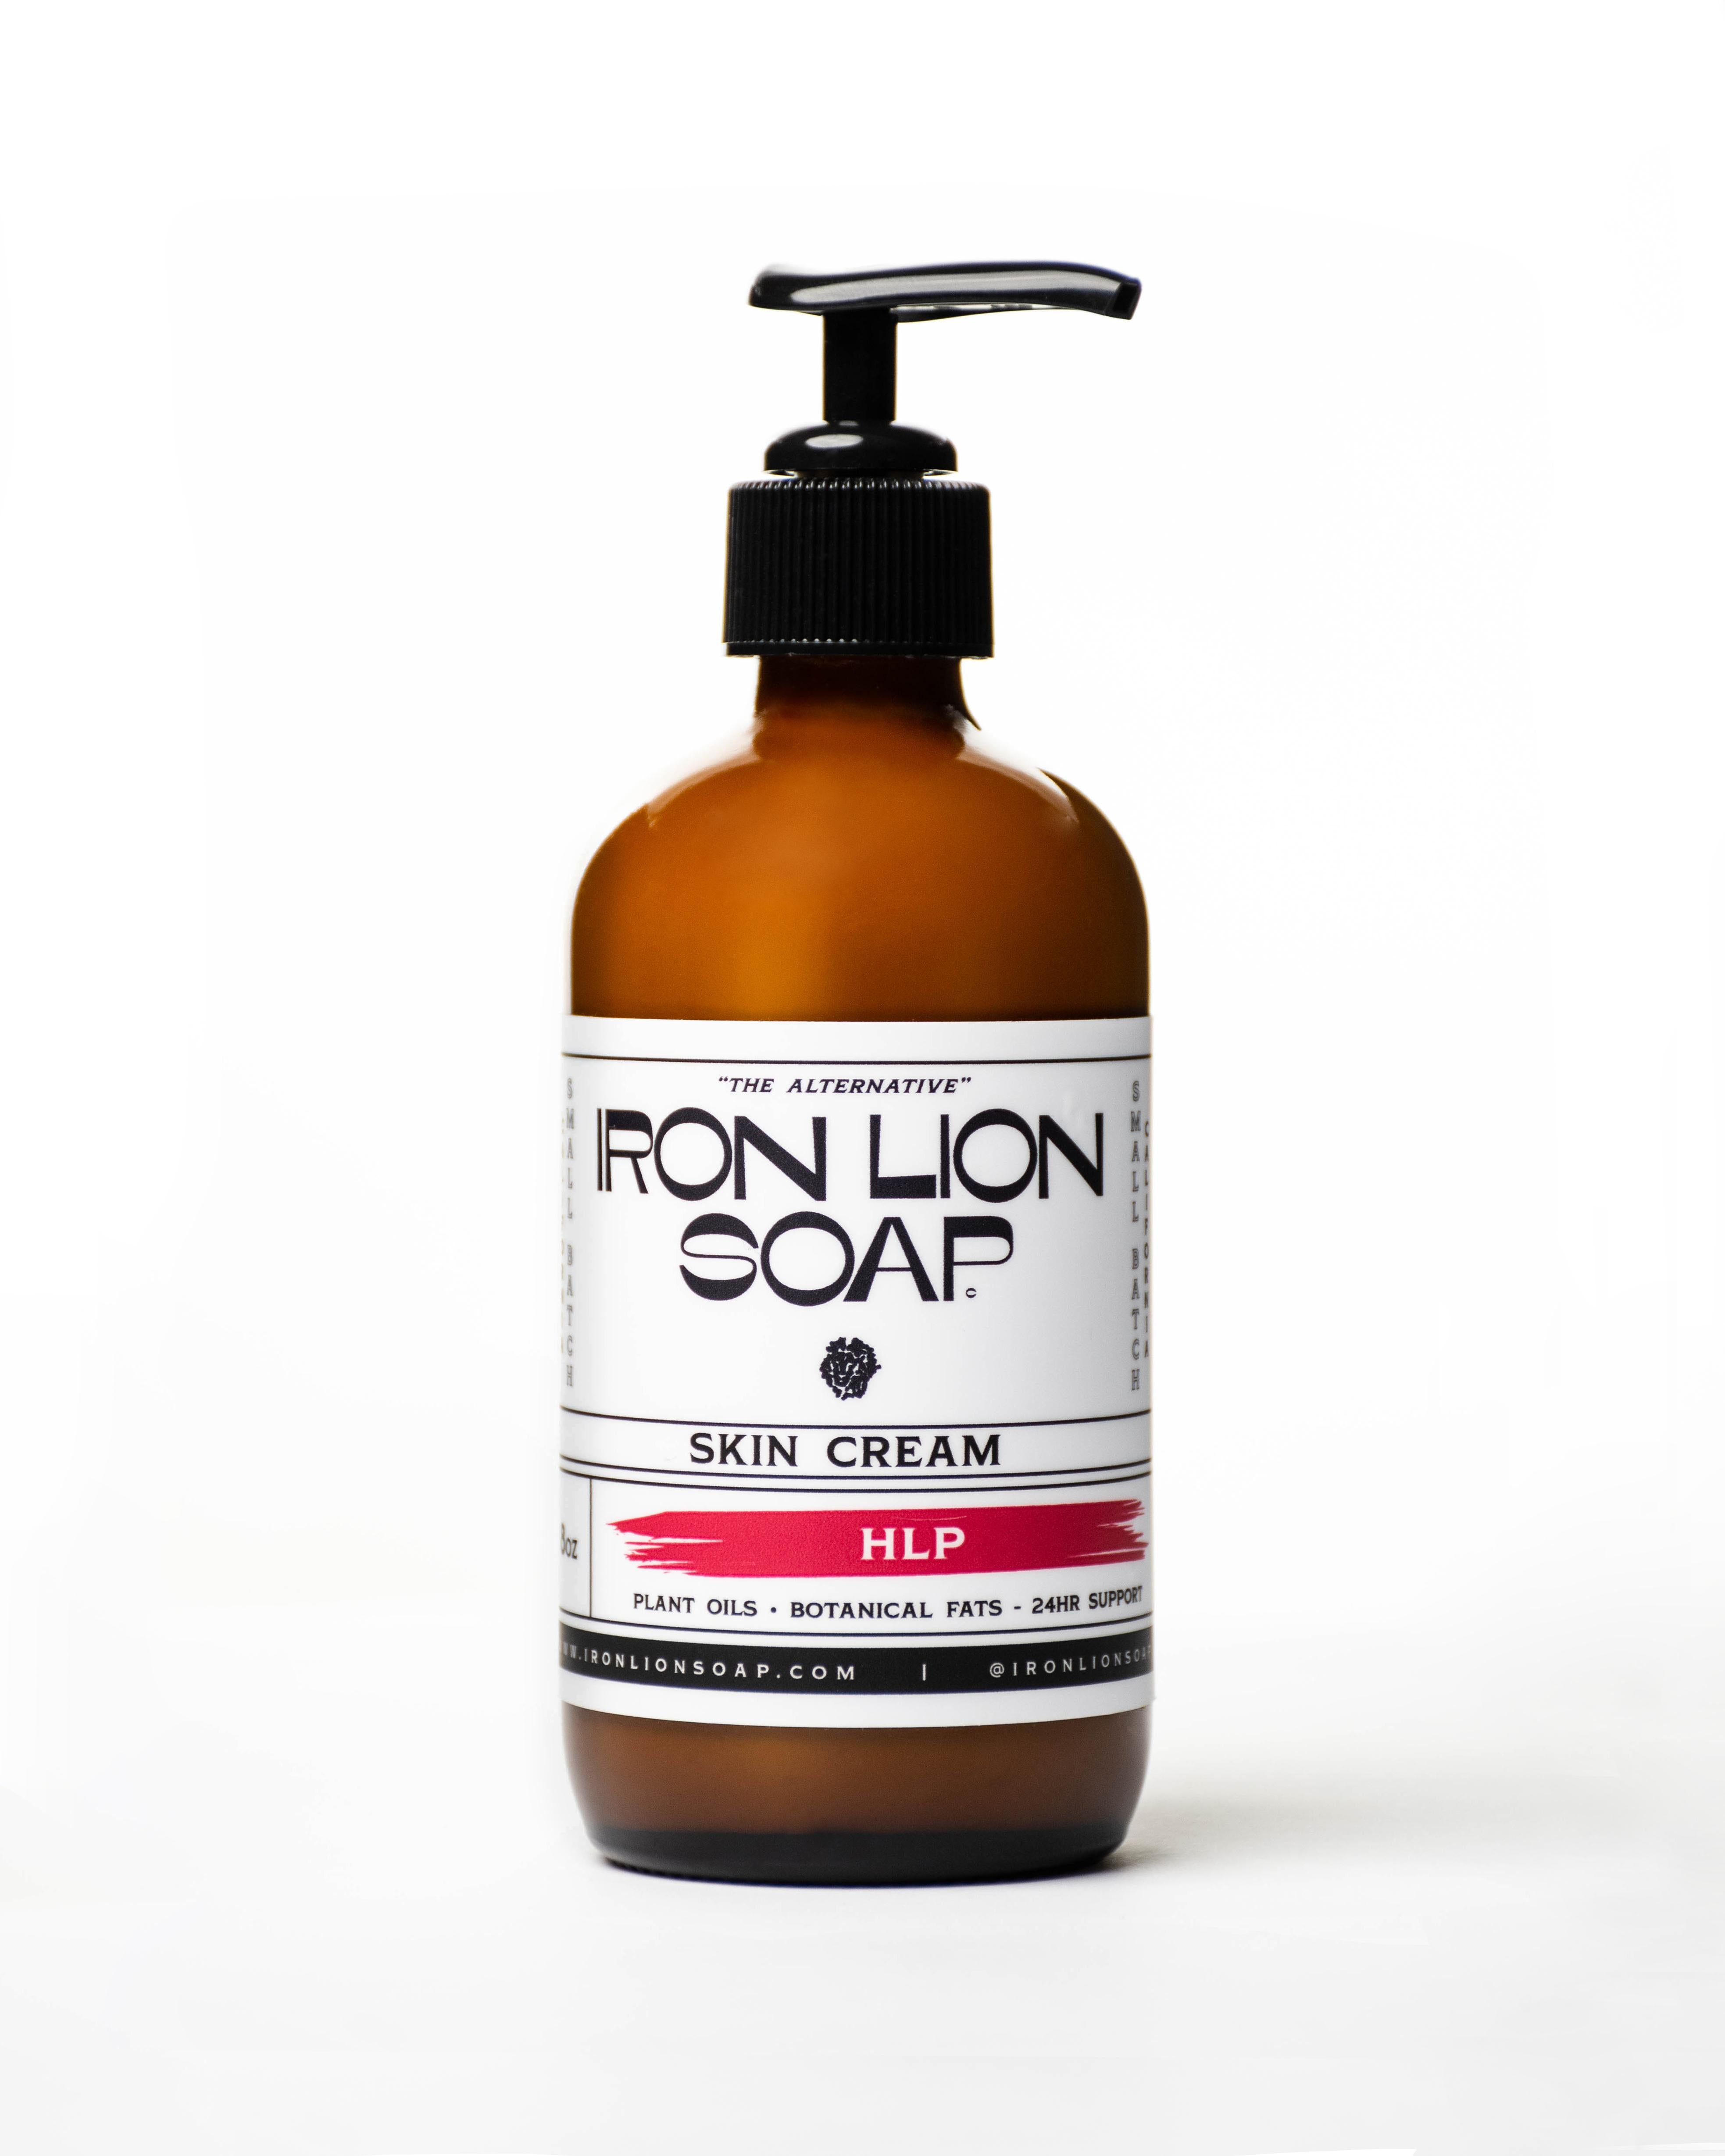 8oz Daily Skin Cream Iron Lion Soap HLP 